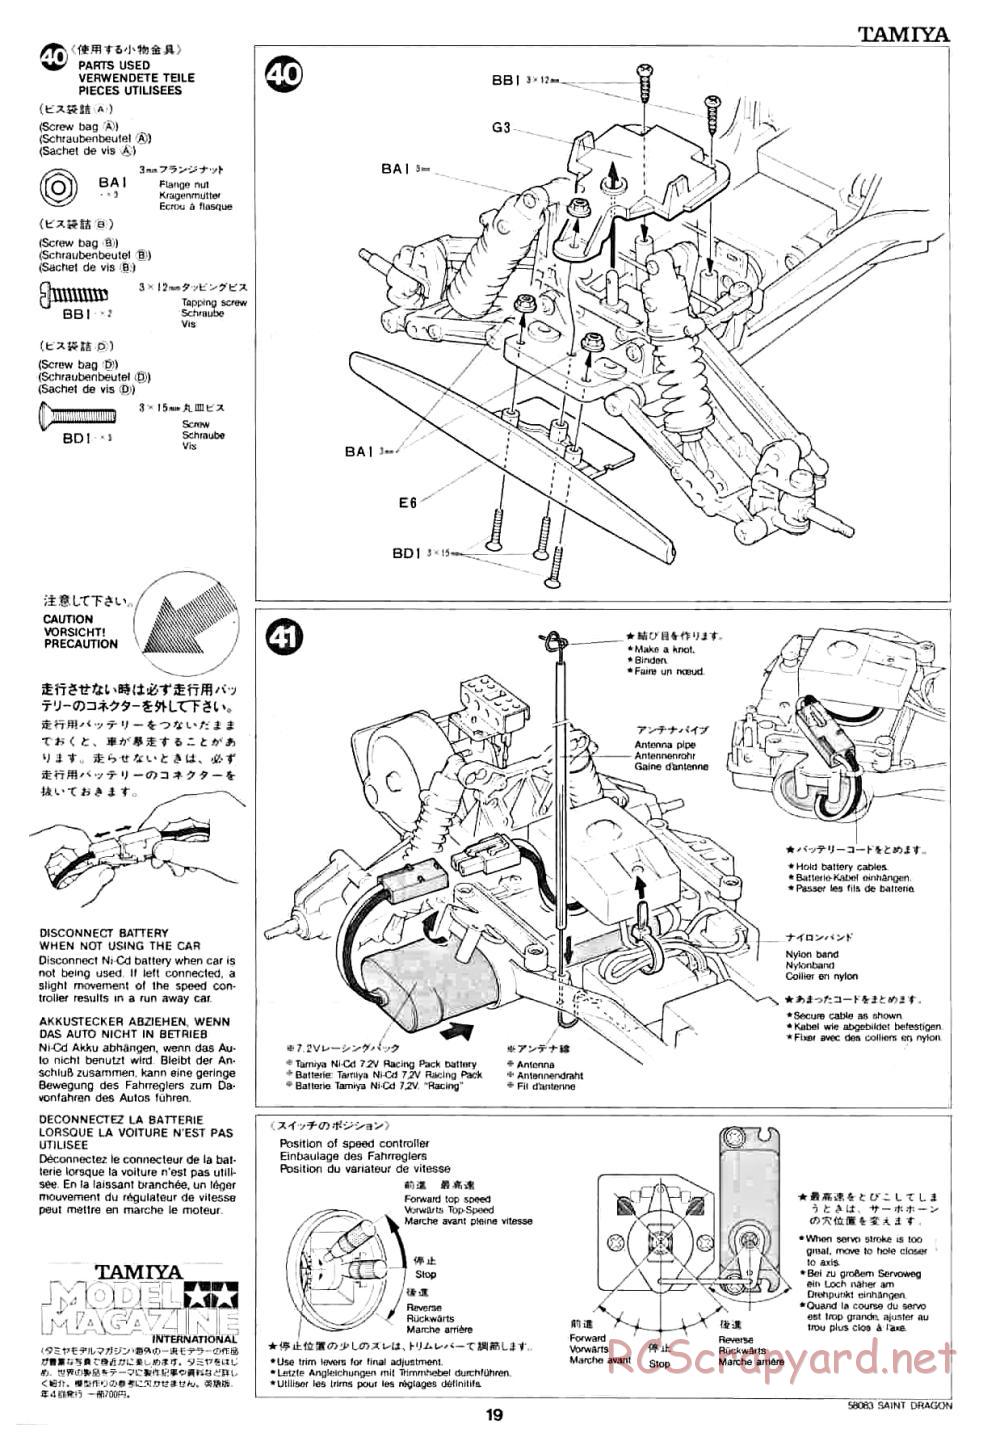 Tamiya - Saint Dragon - 58083 - Manual - Page 19